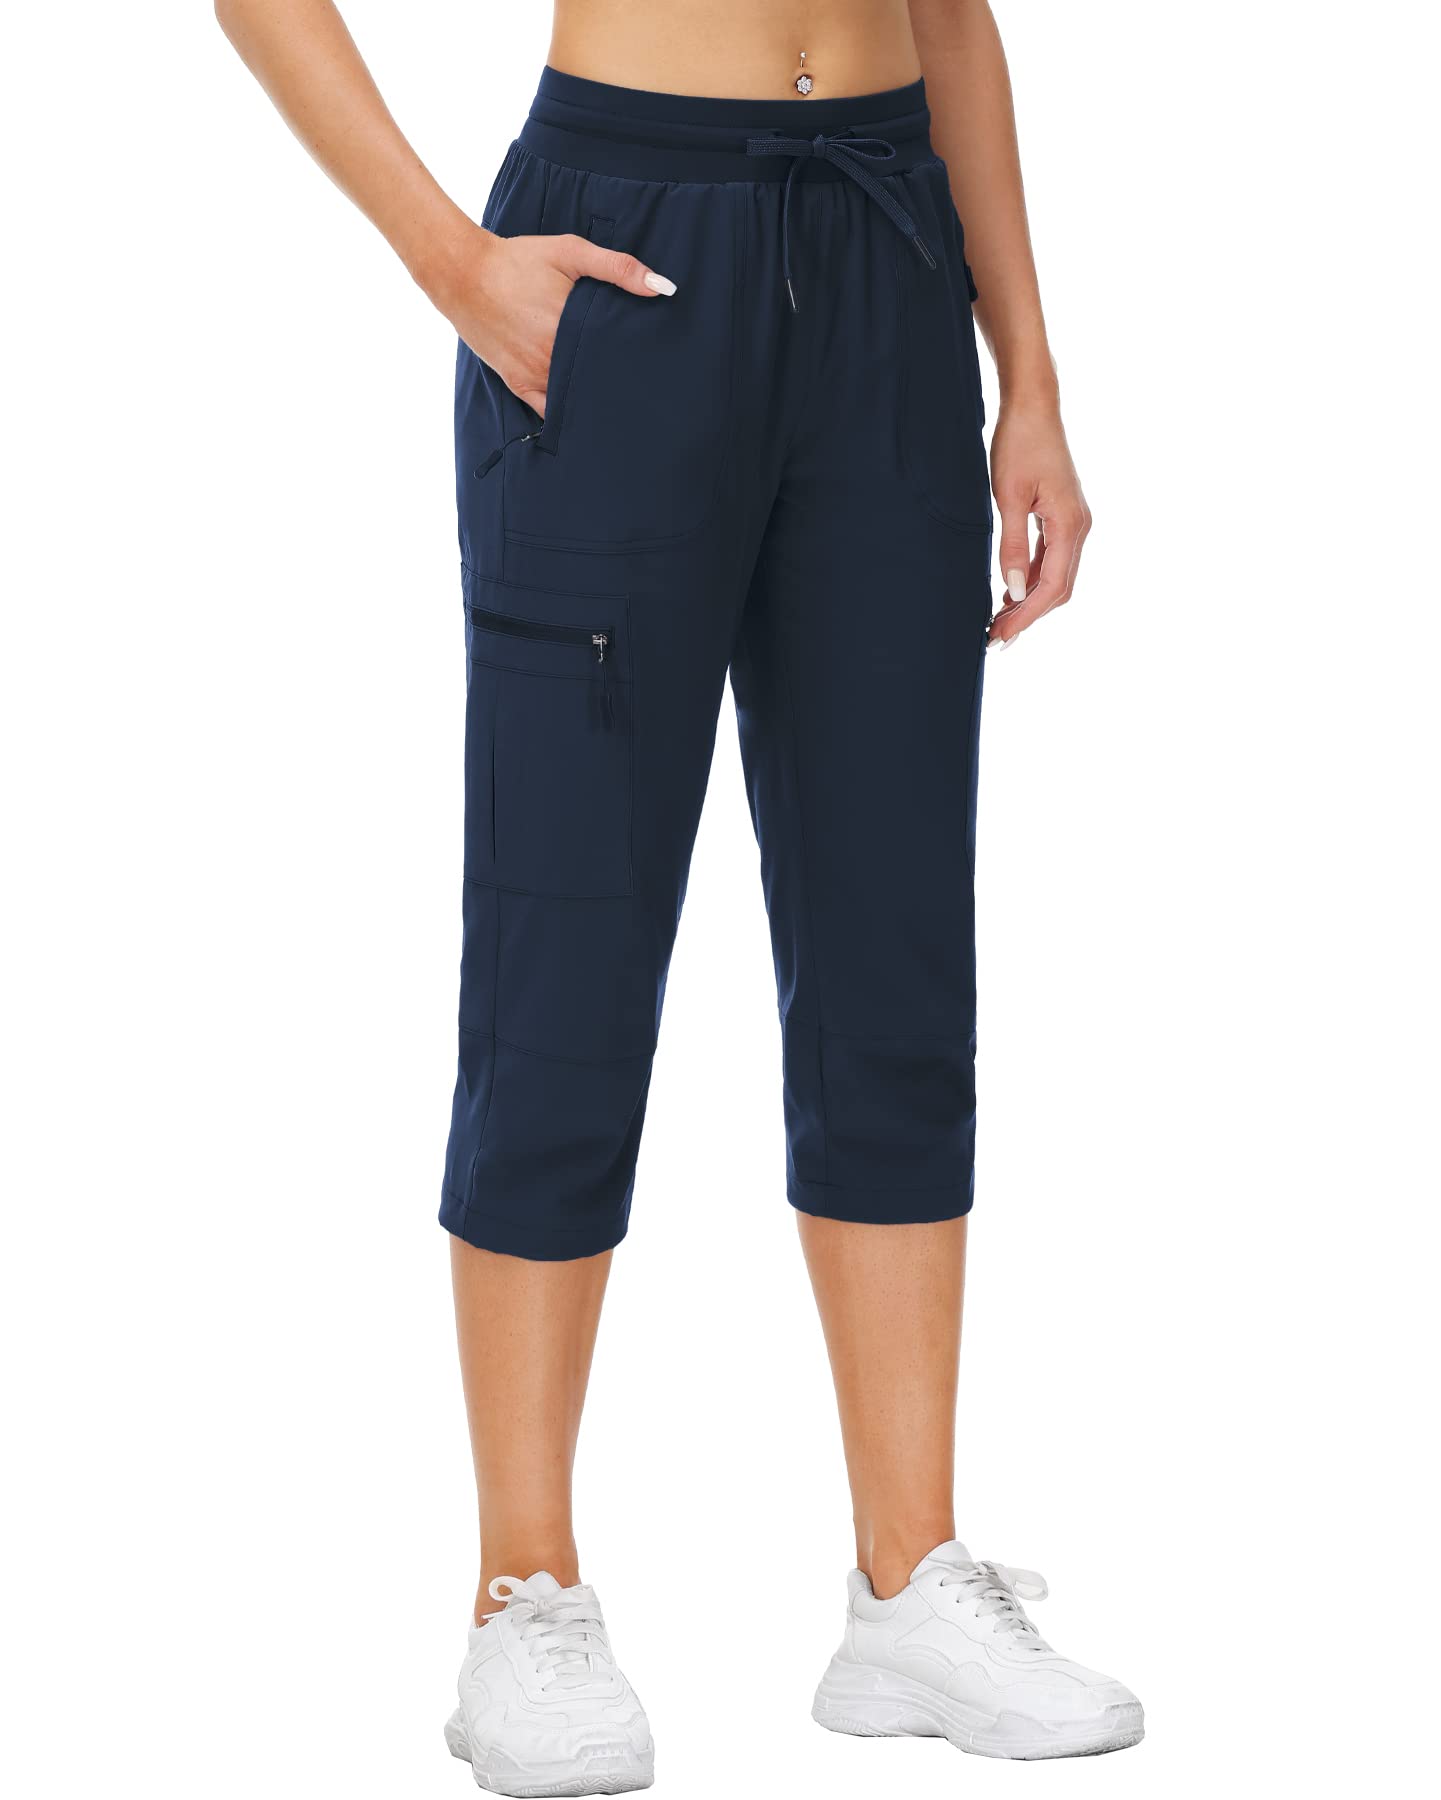 VILIGO Hiking Pants Women Elastic Wasit Quick Dry Casual Solid Loose Fit Hiking Pants Navy XS